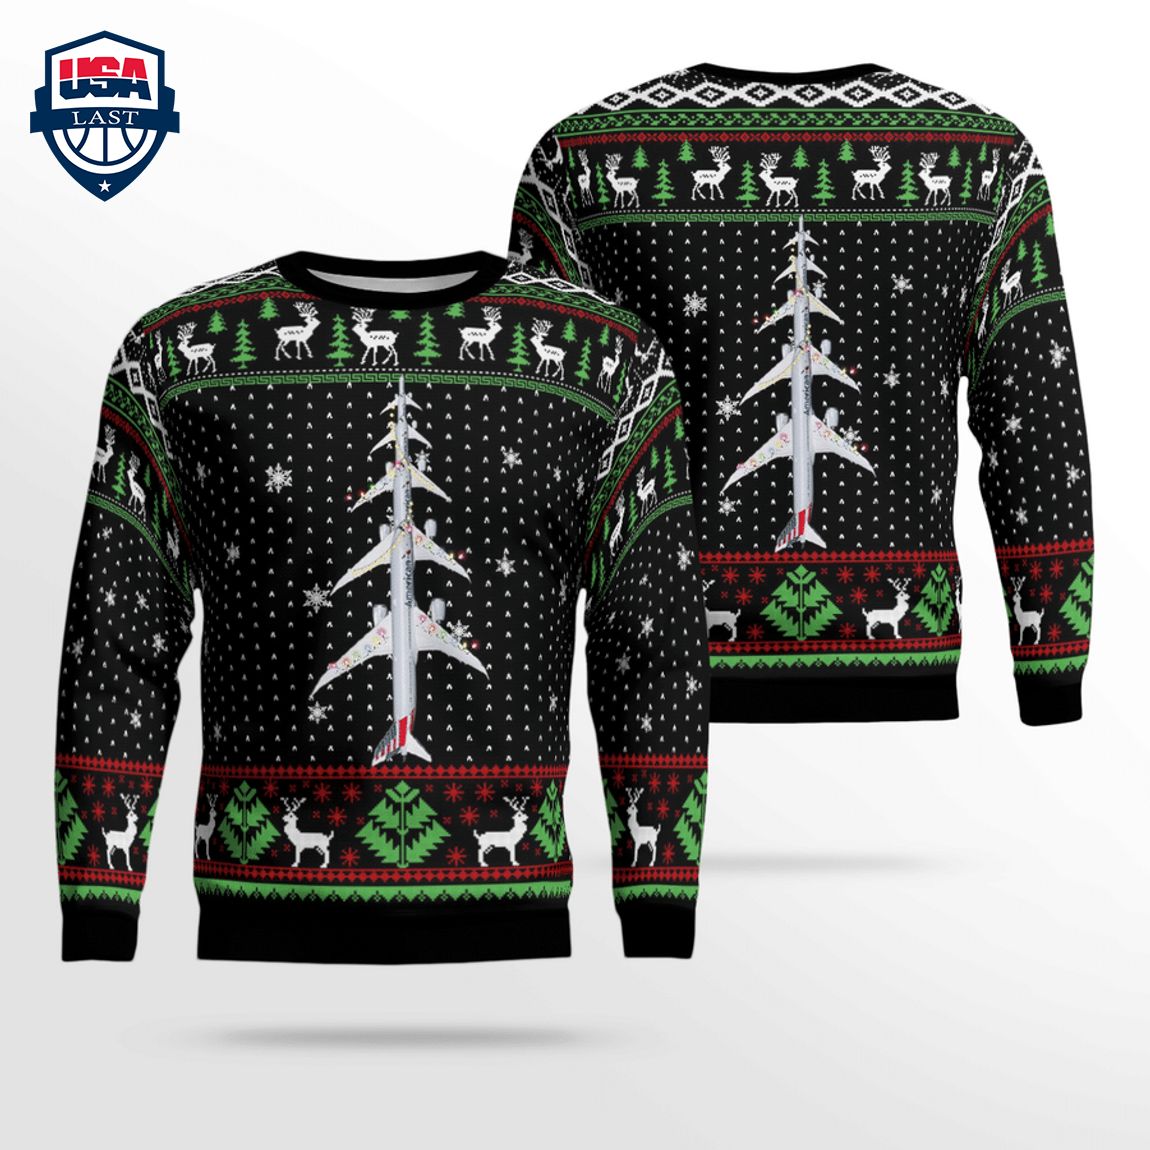 United Airlines Boeing 787-9 Dreamliner Ver 2 3D Christmas Sweater